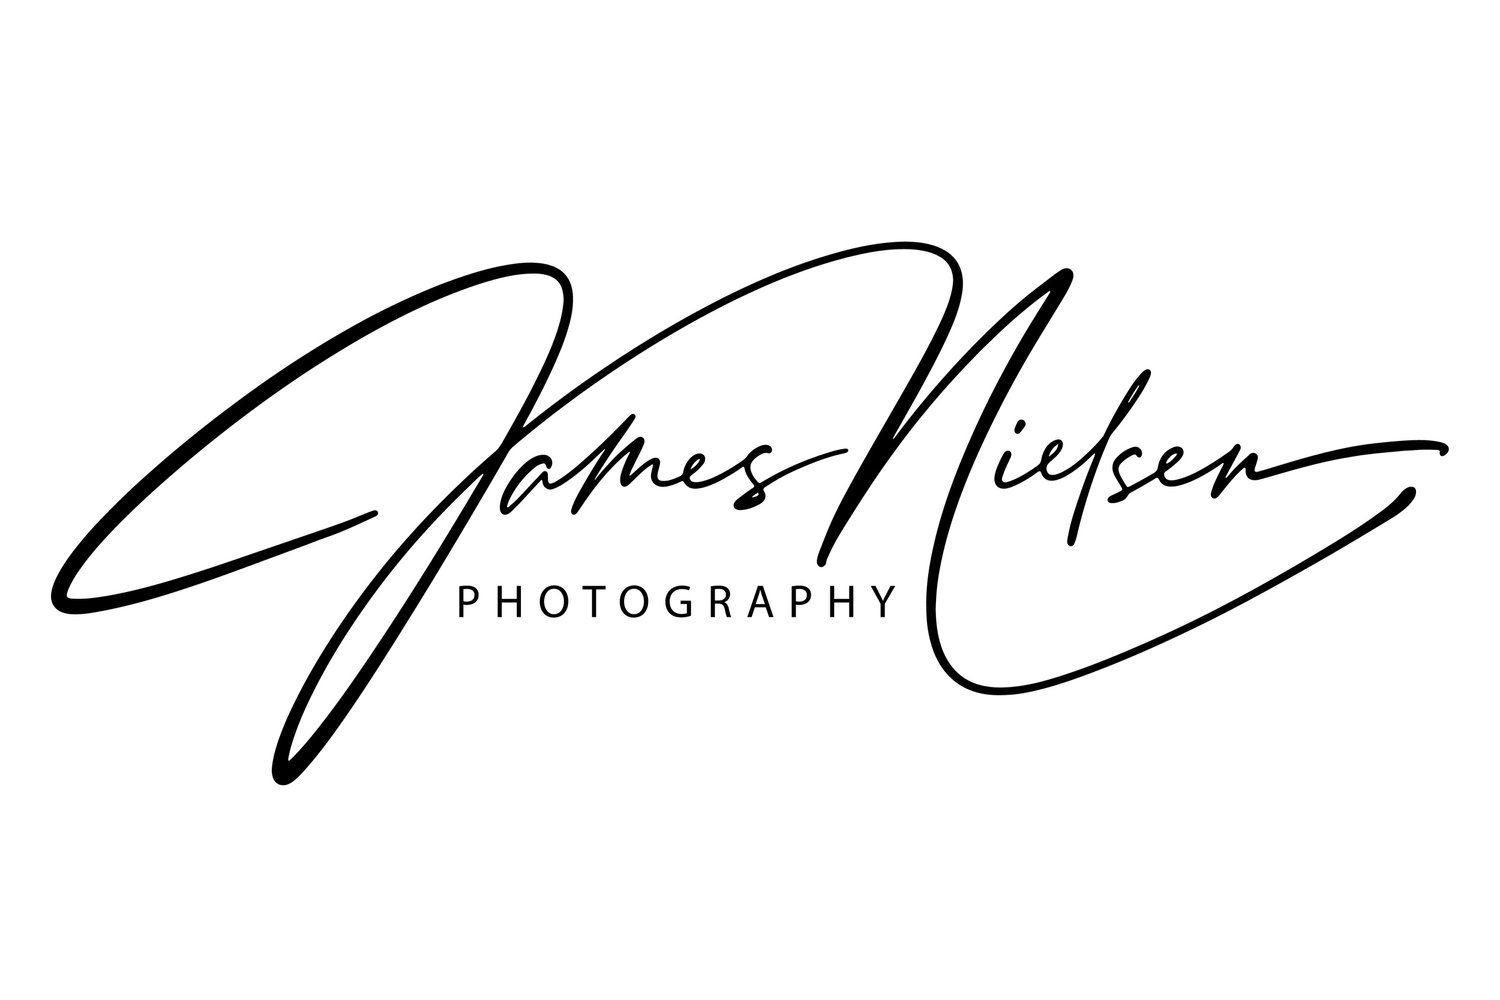 James Nielsen Photography